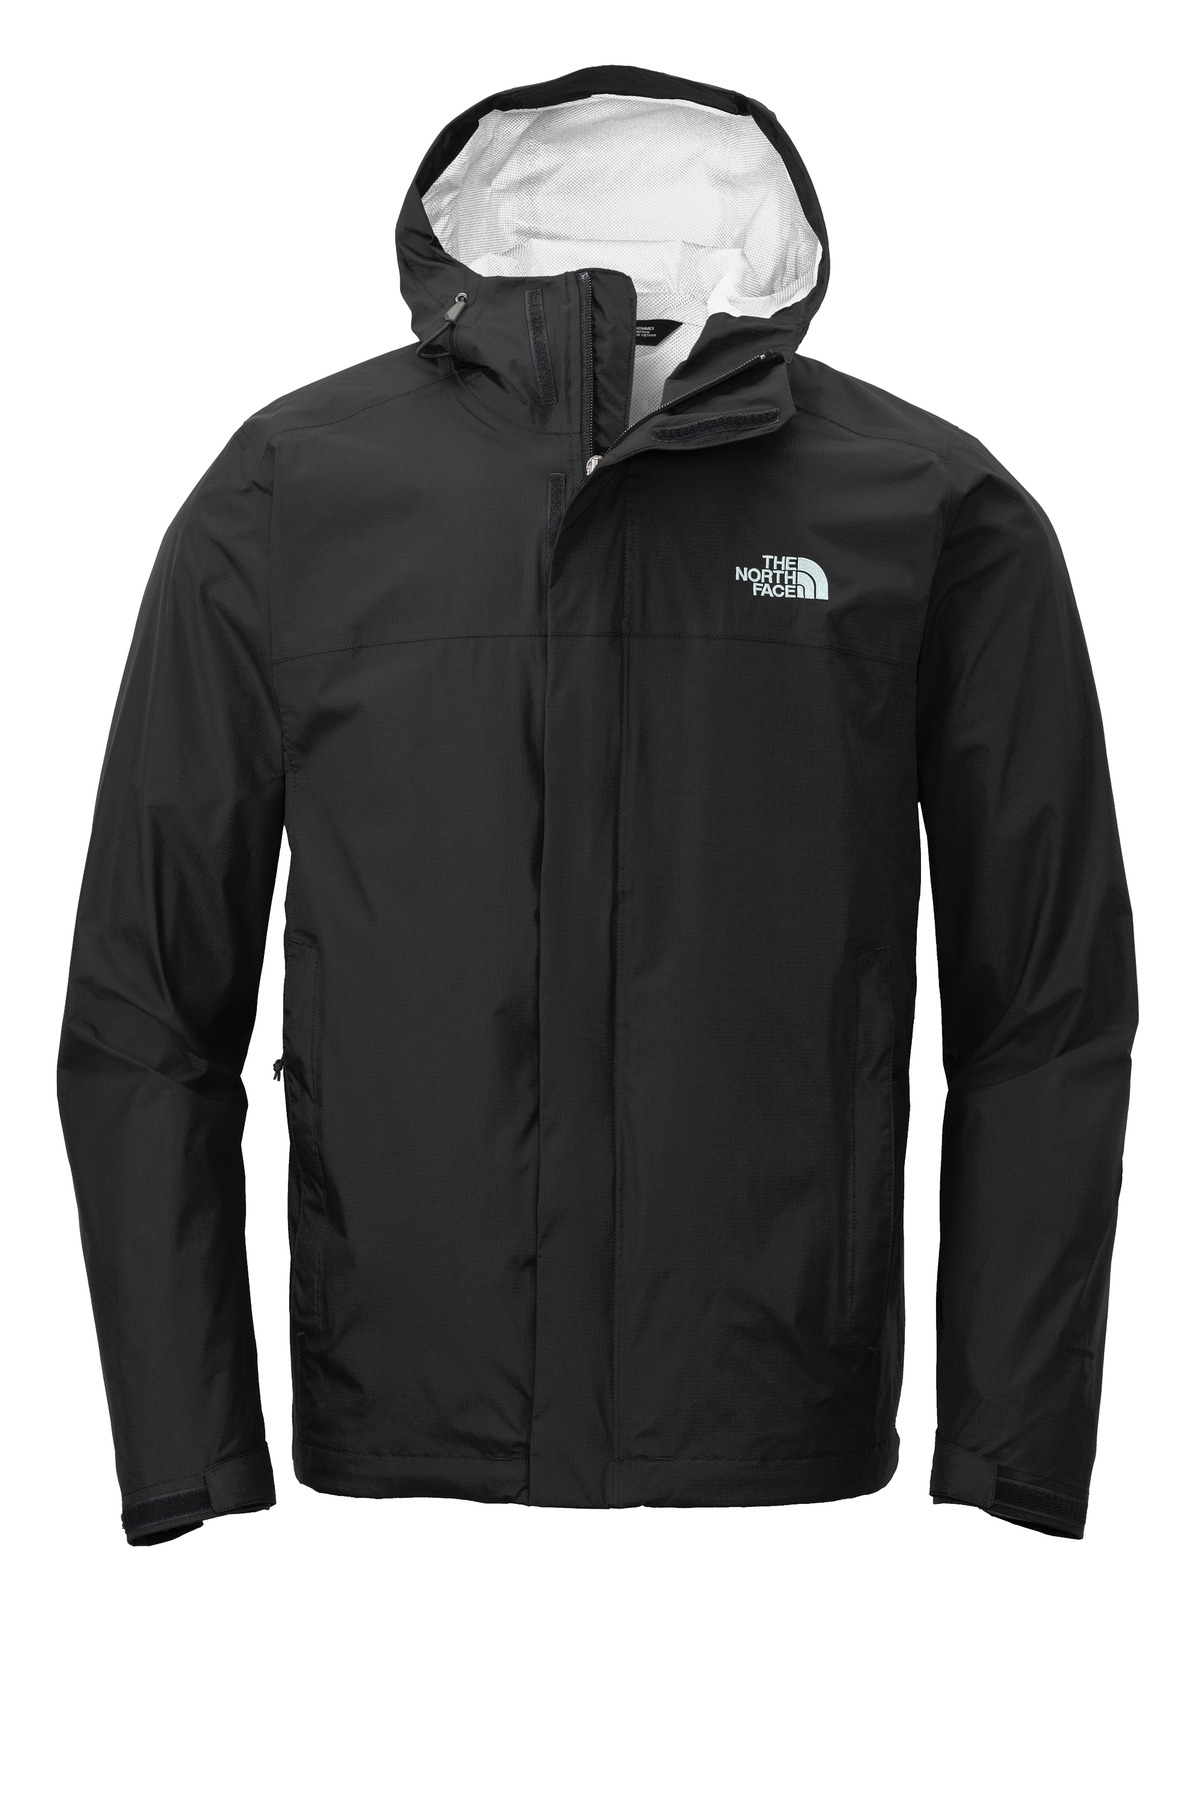 The North Face ® DryVent ™ Rain Jacket. NF0A3LH4 - Custom Shirt Shop